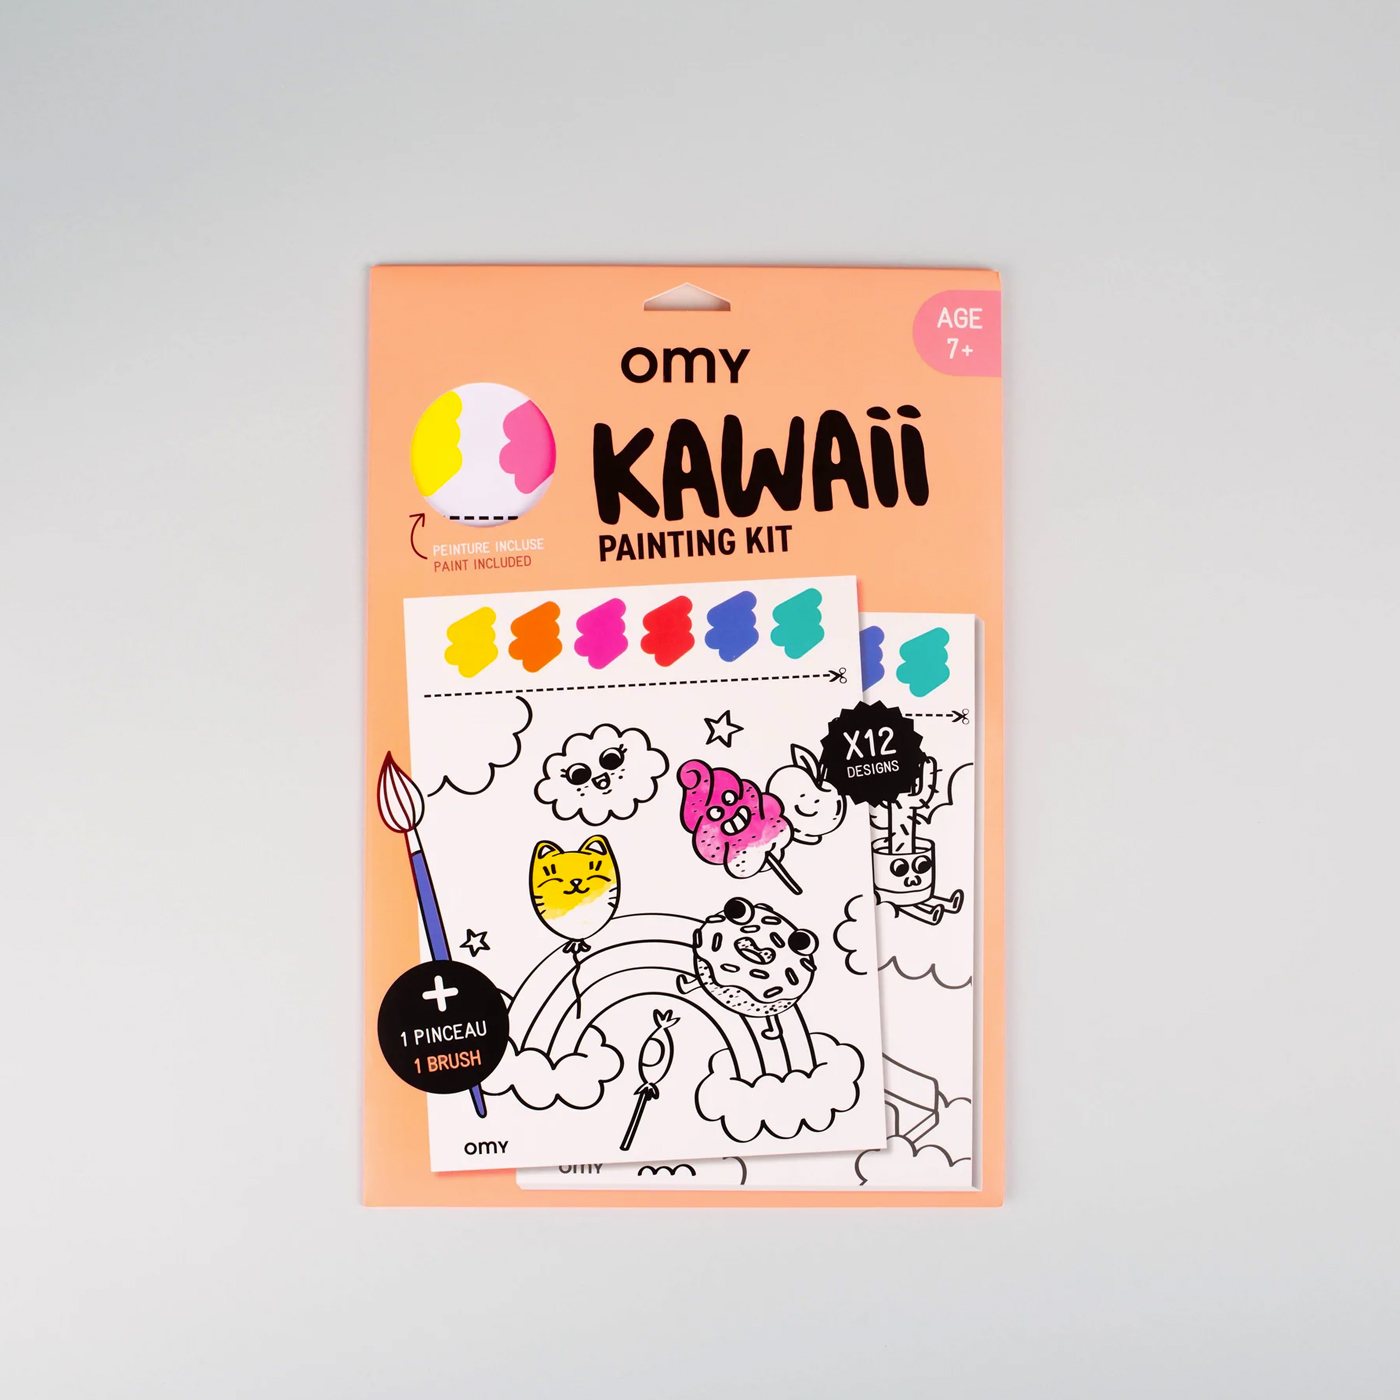 OMY Omy Painting Kit  | Kawaii